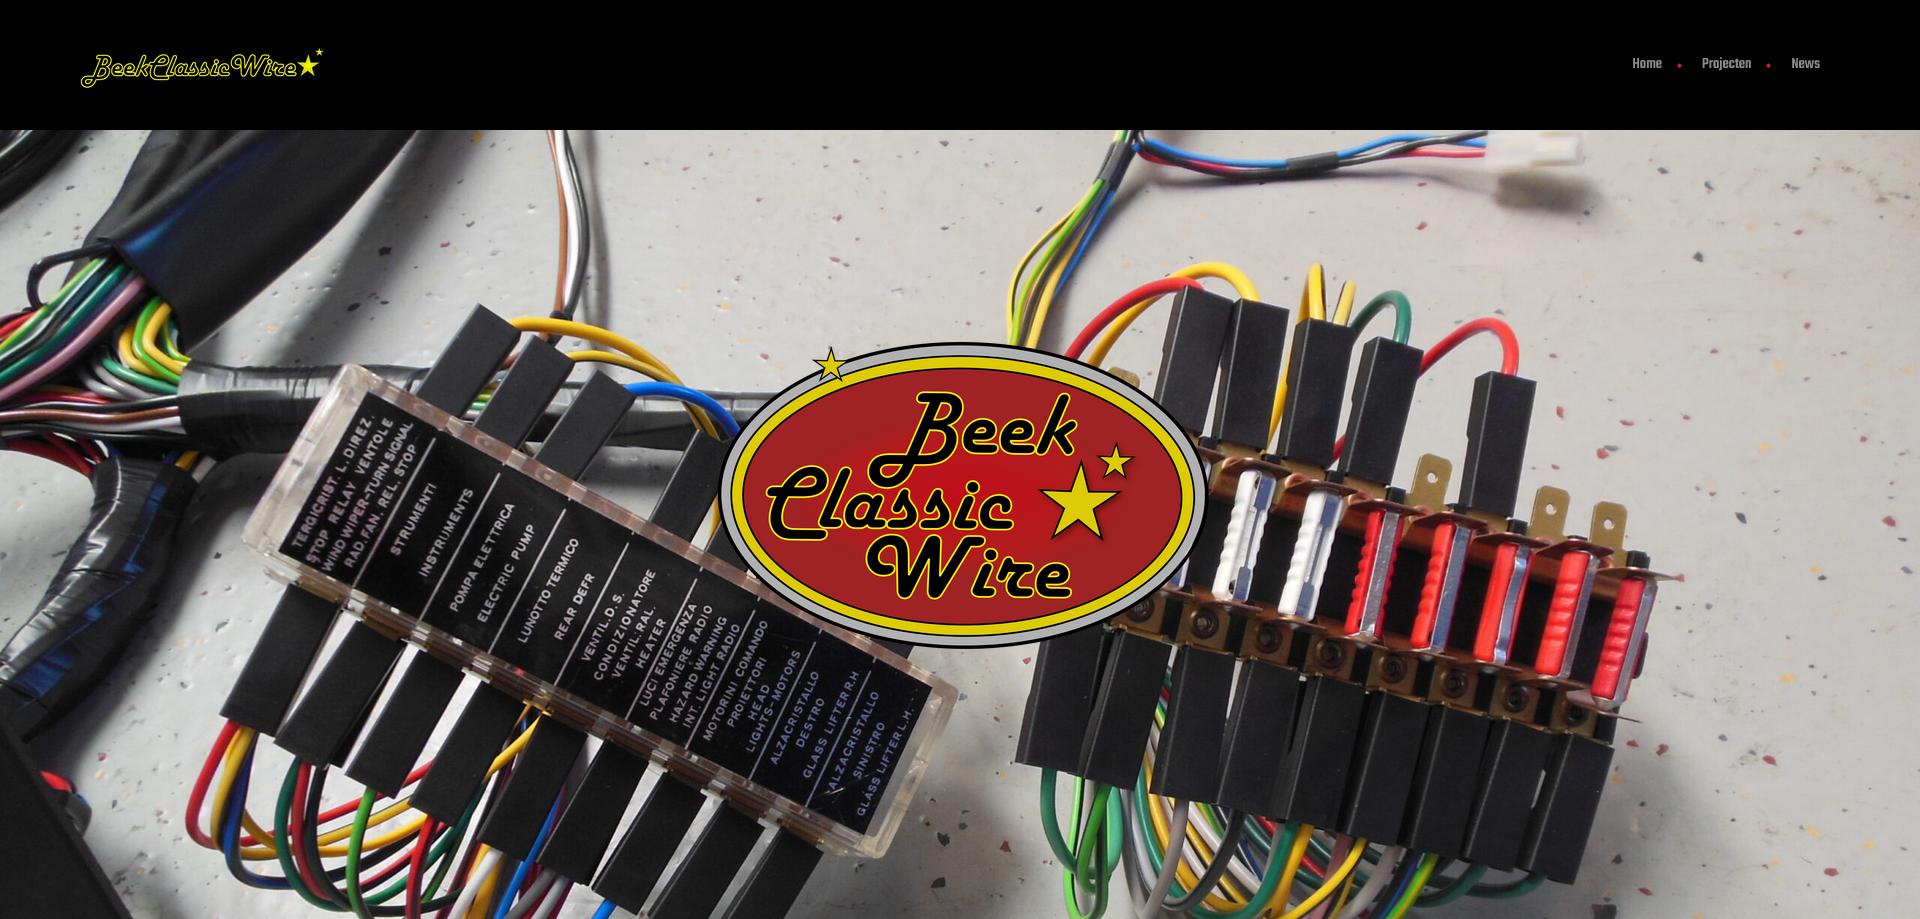 Beek Classic Wire